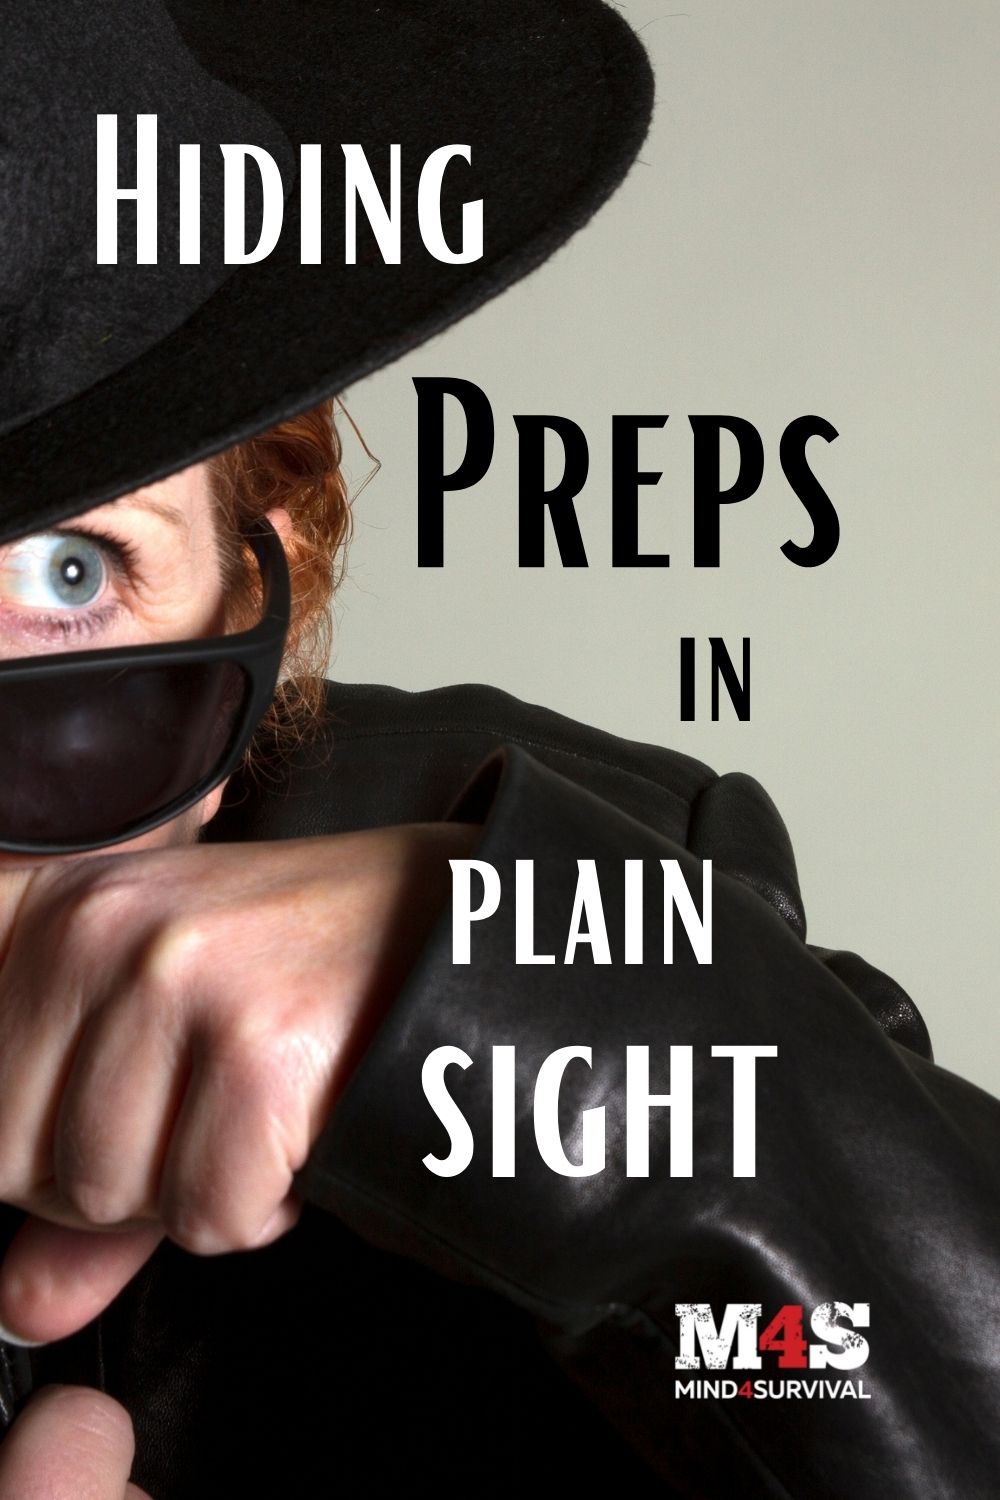 The Secrets to Hiding Preps in Plain Sight